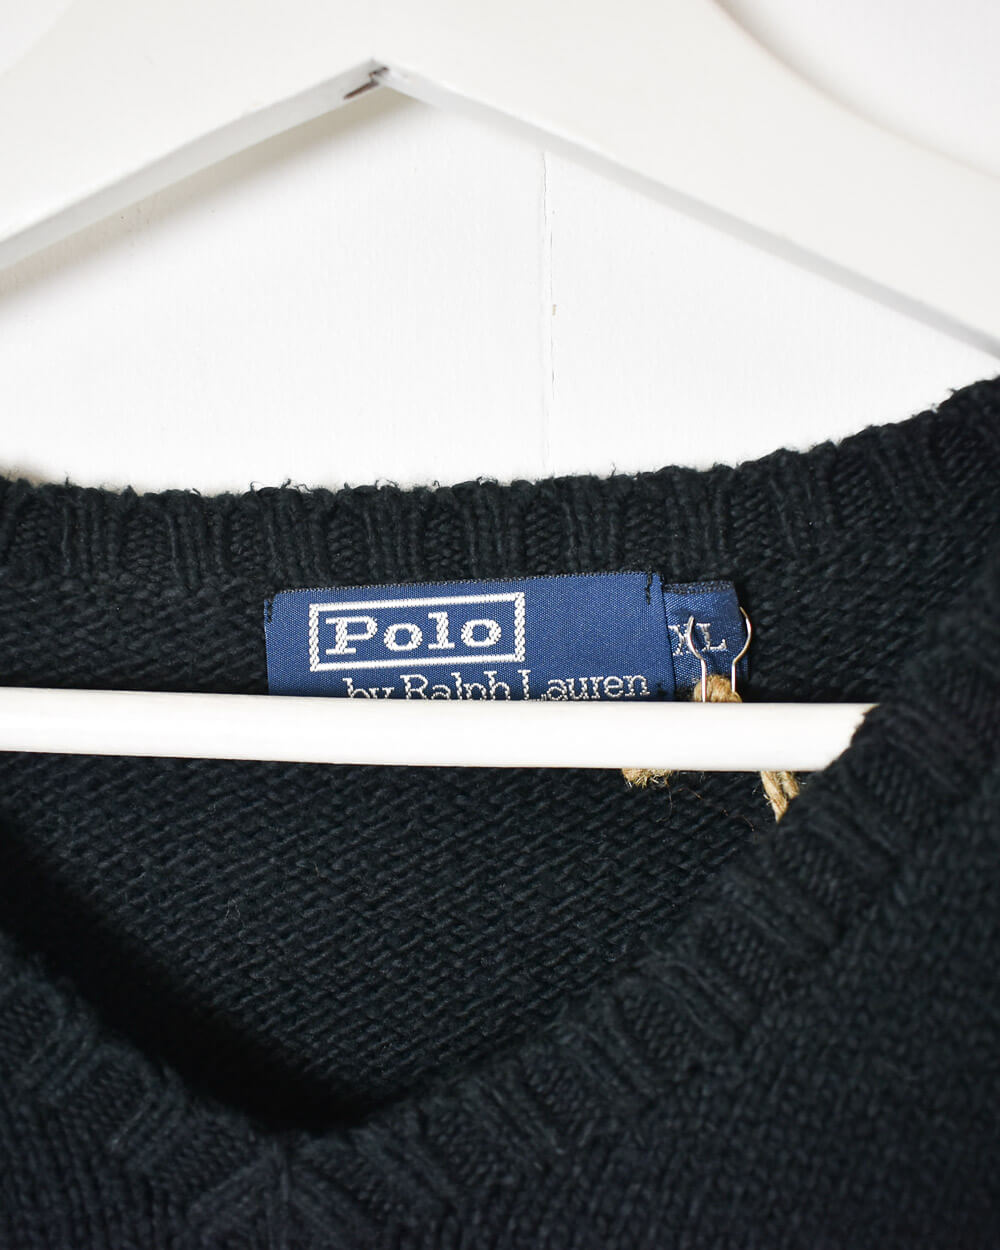 Black Ralph Lauren Knitted Sweatshirt Vest - X-Large